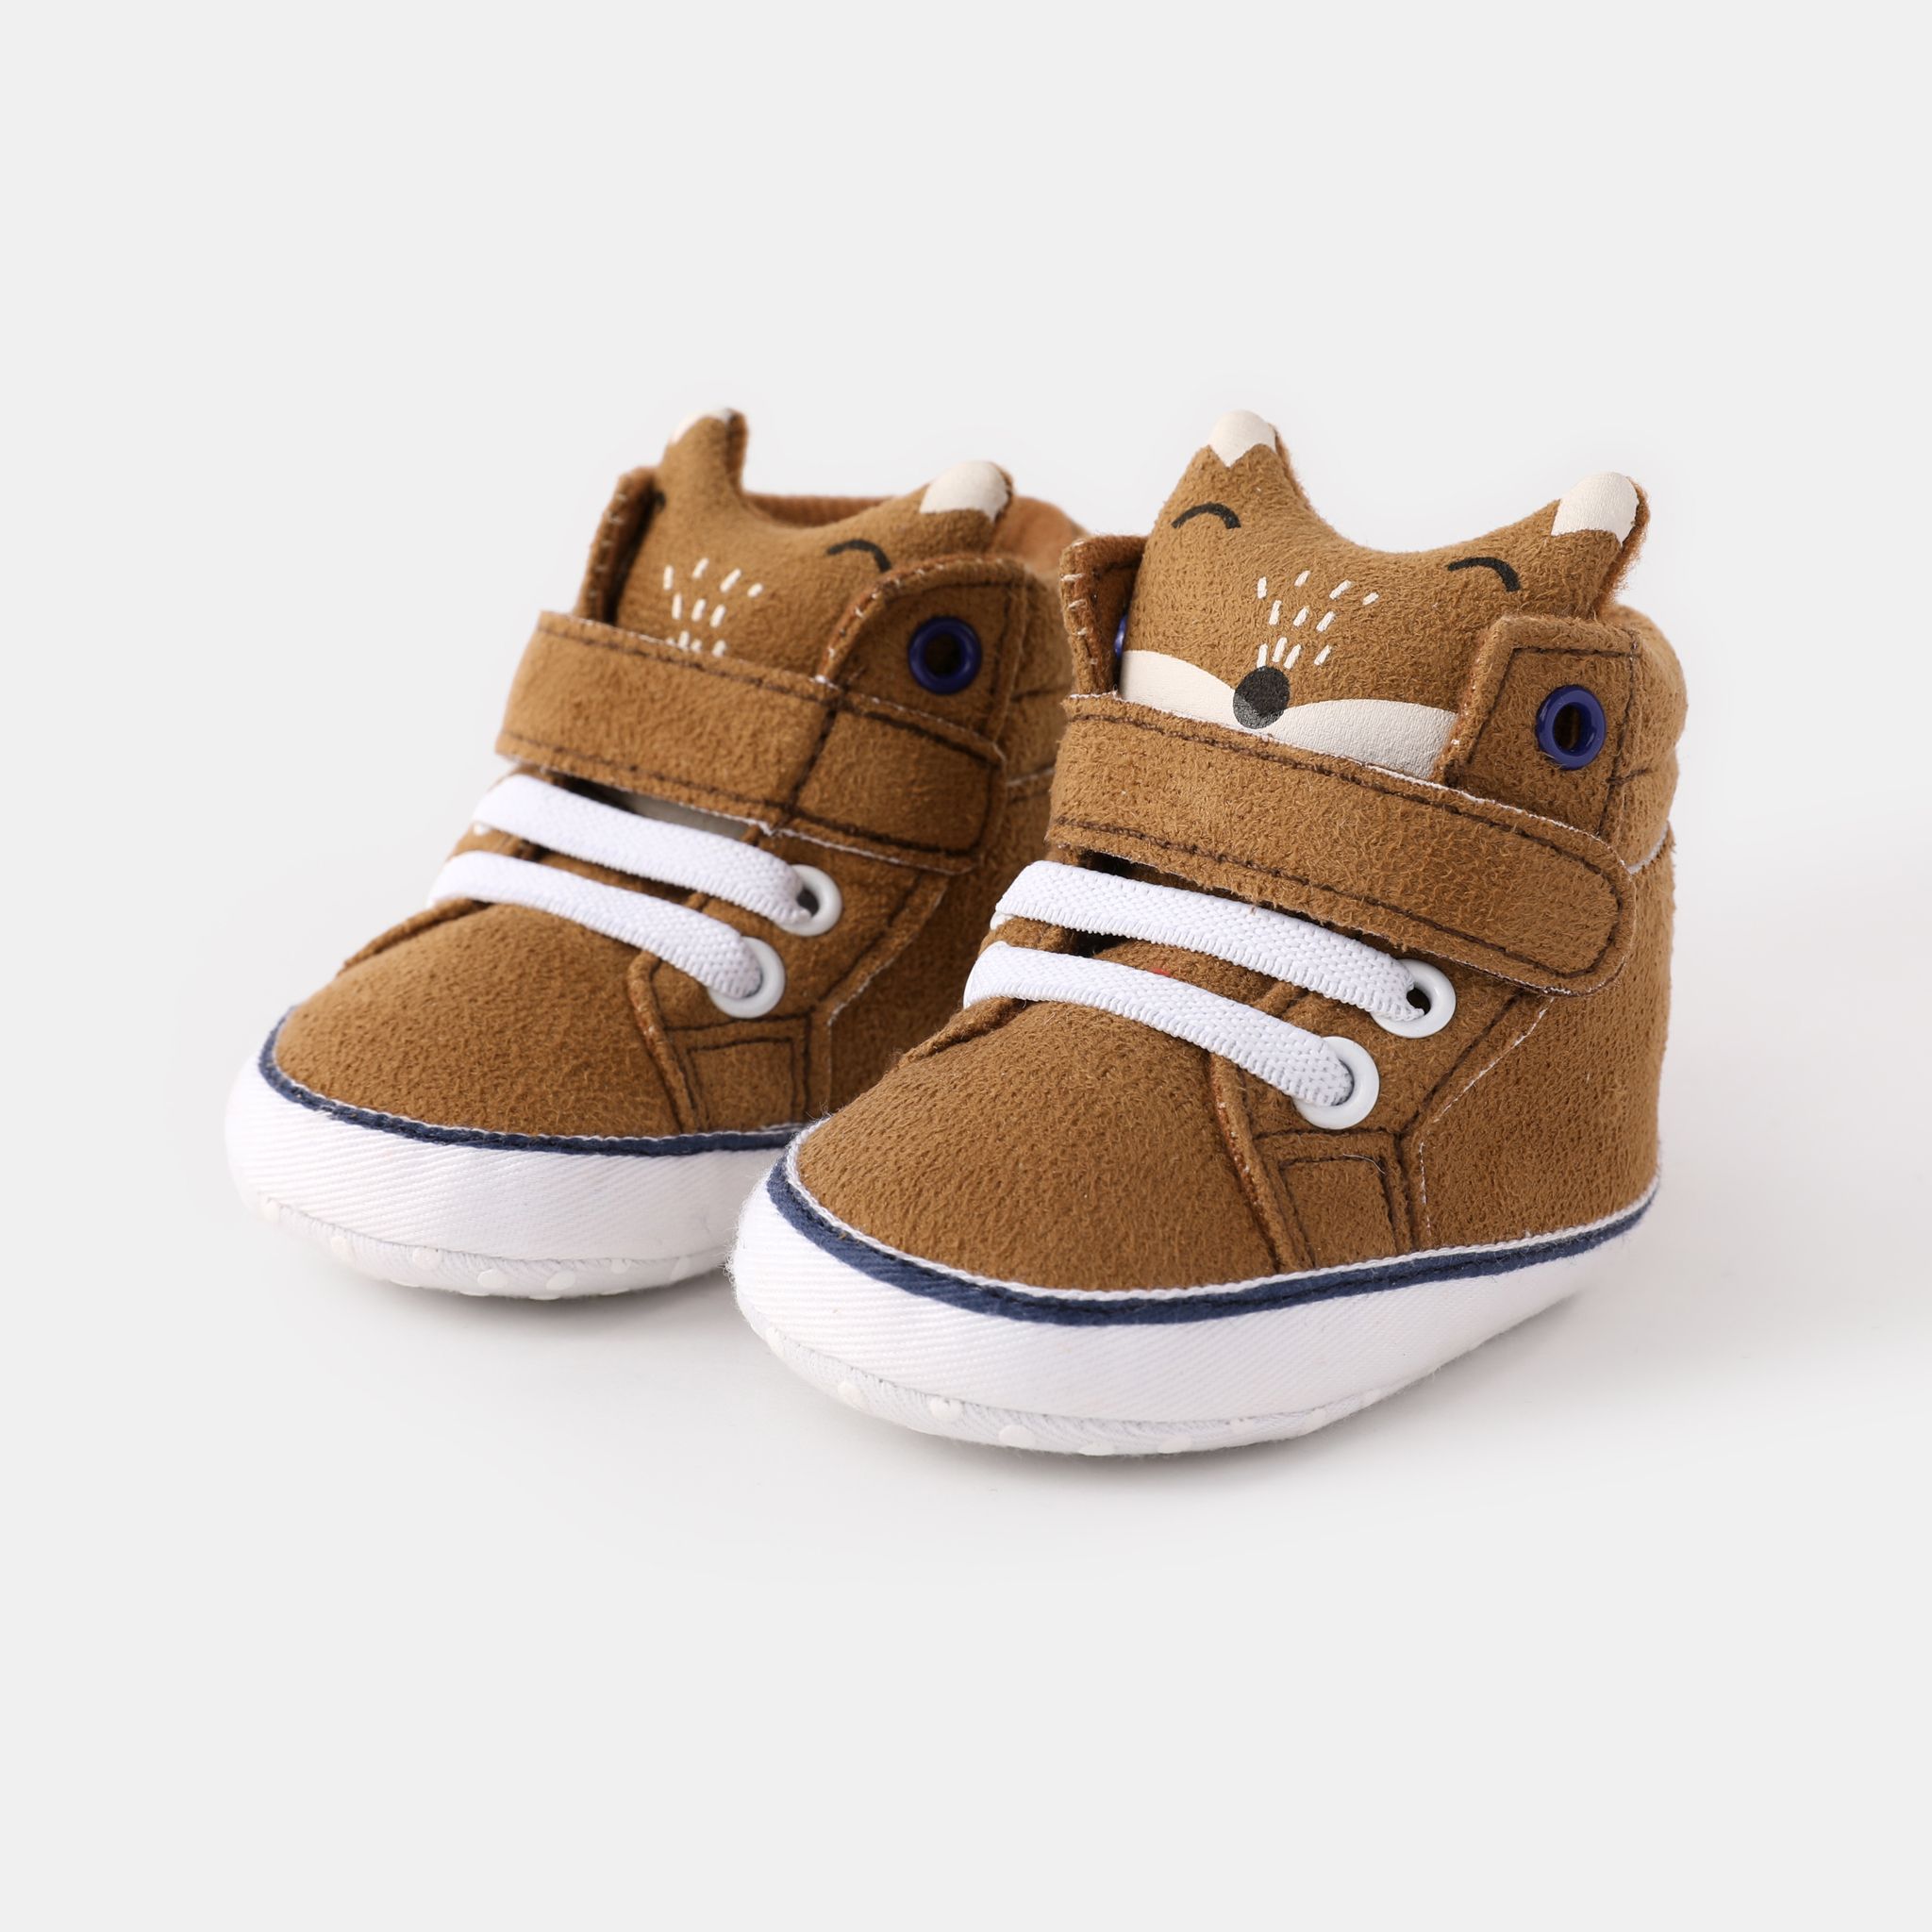 Baby & Toddler Cute Fox Pattern Velcro Prewalker Shoes